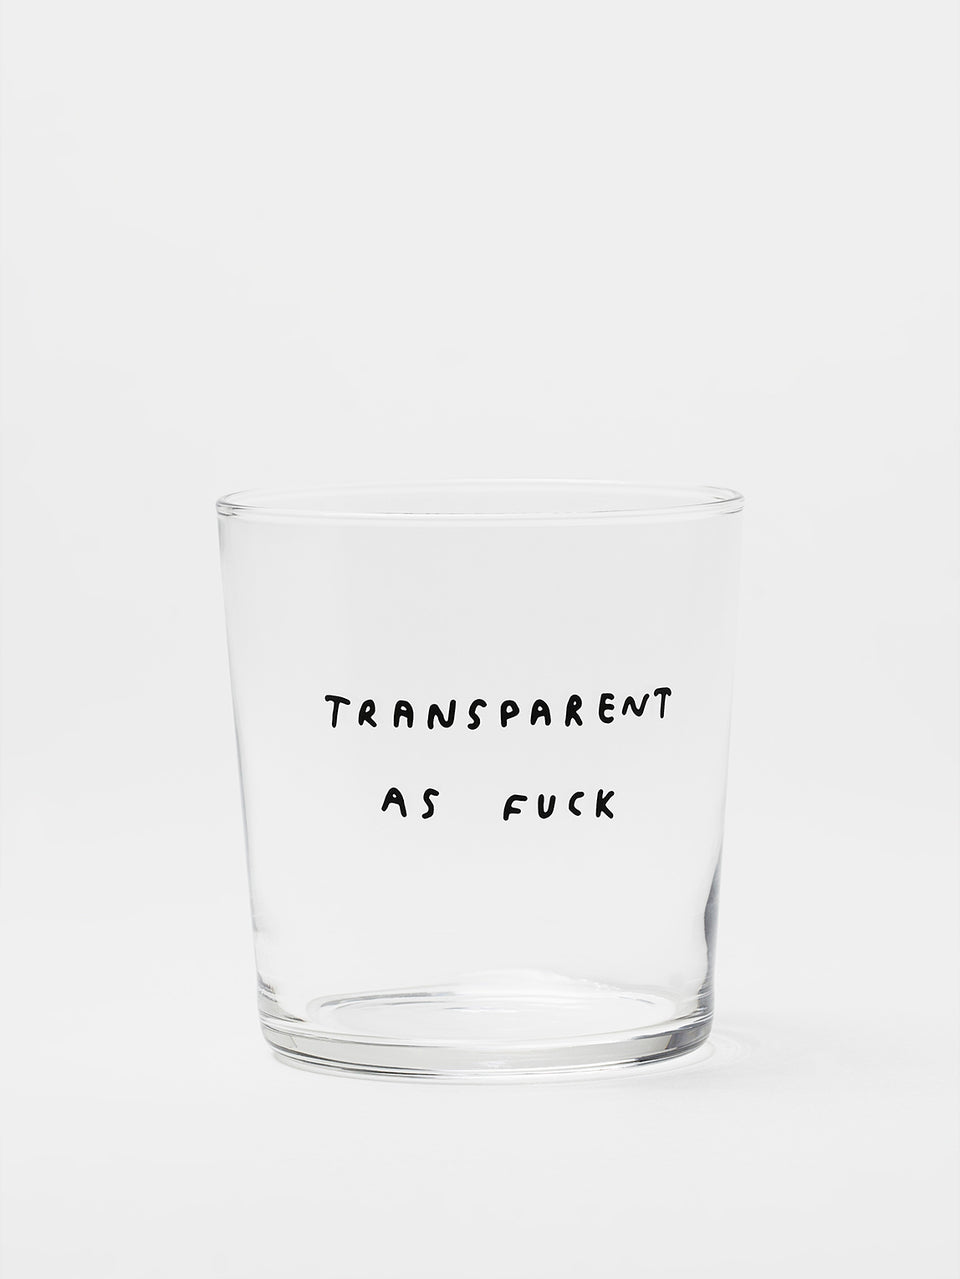 Yahya Studio, Statement Glass/Becher Transparent as fuck, Glas,  Ø8,5 cm (360 ml)